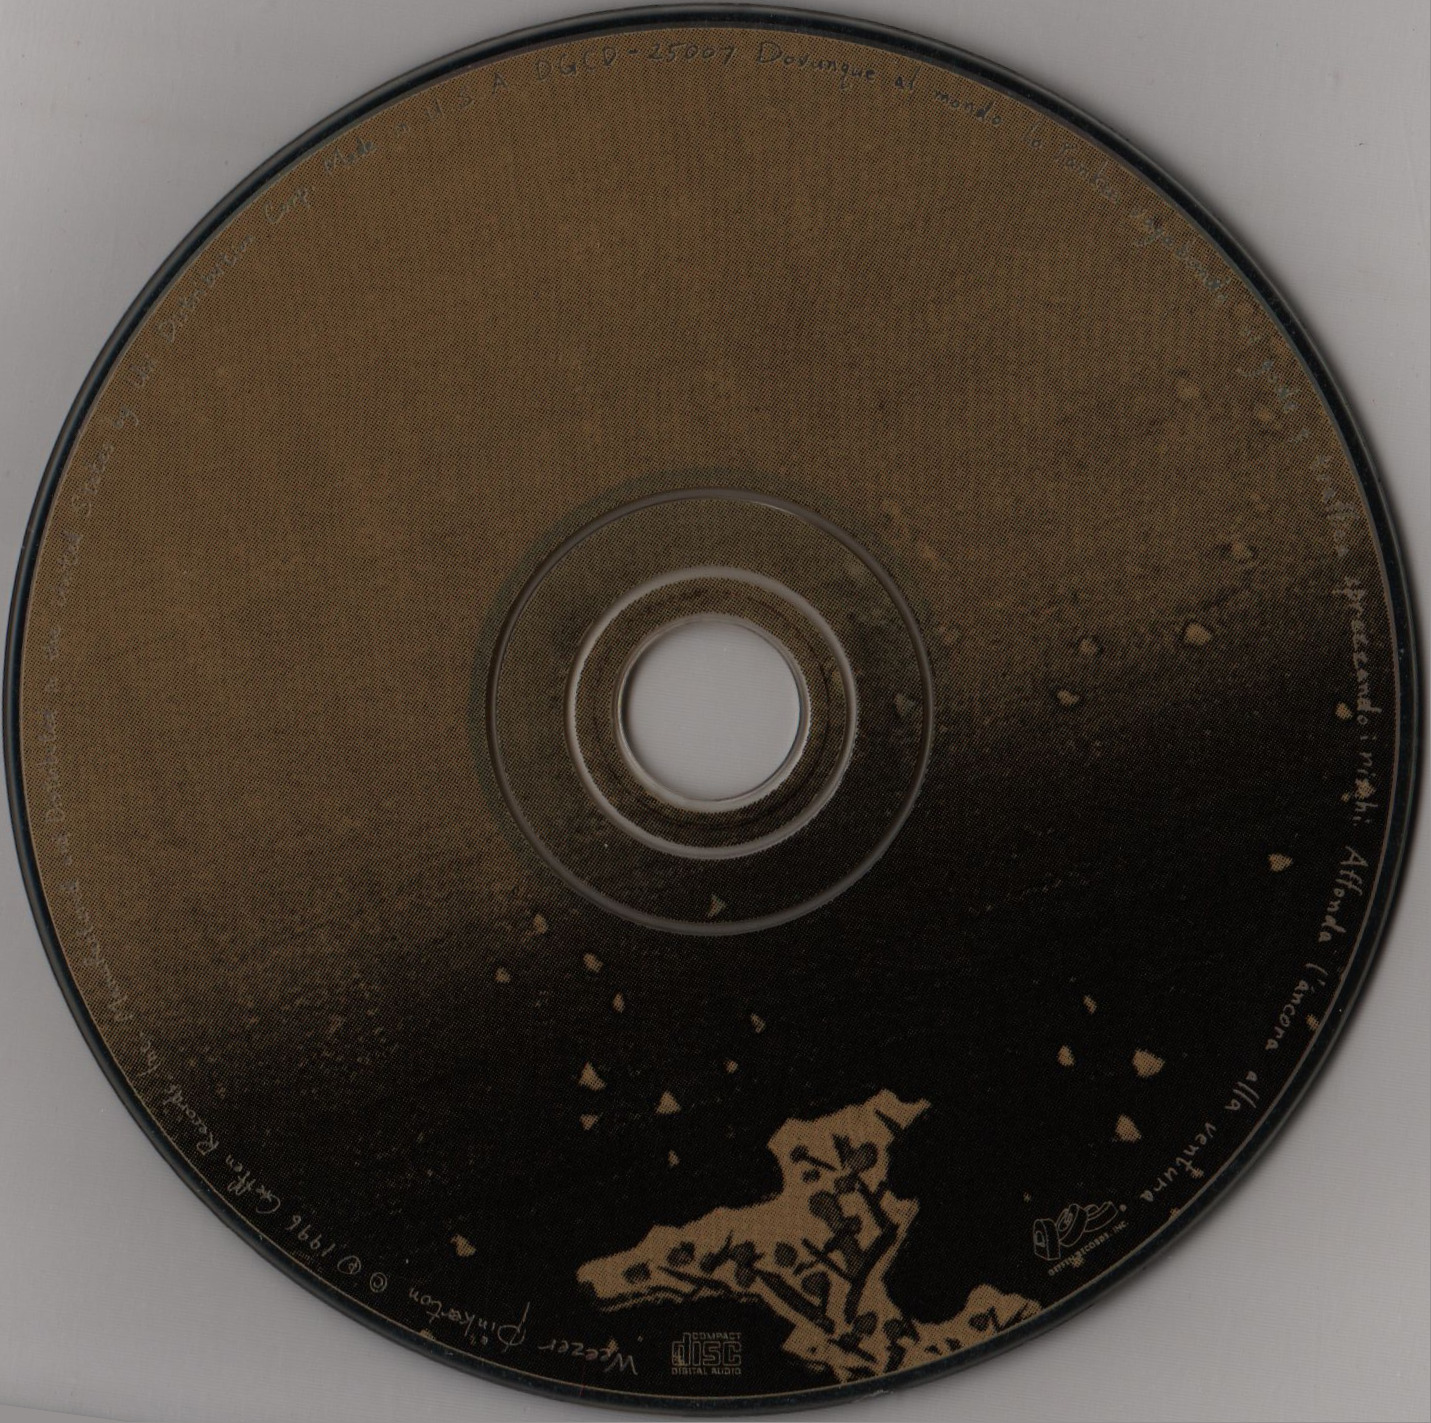 Release “Pinkerton” by Weezer - Cover Art - MusicBrainz